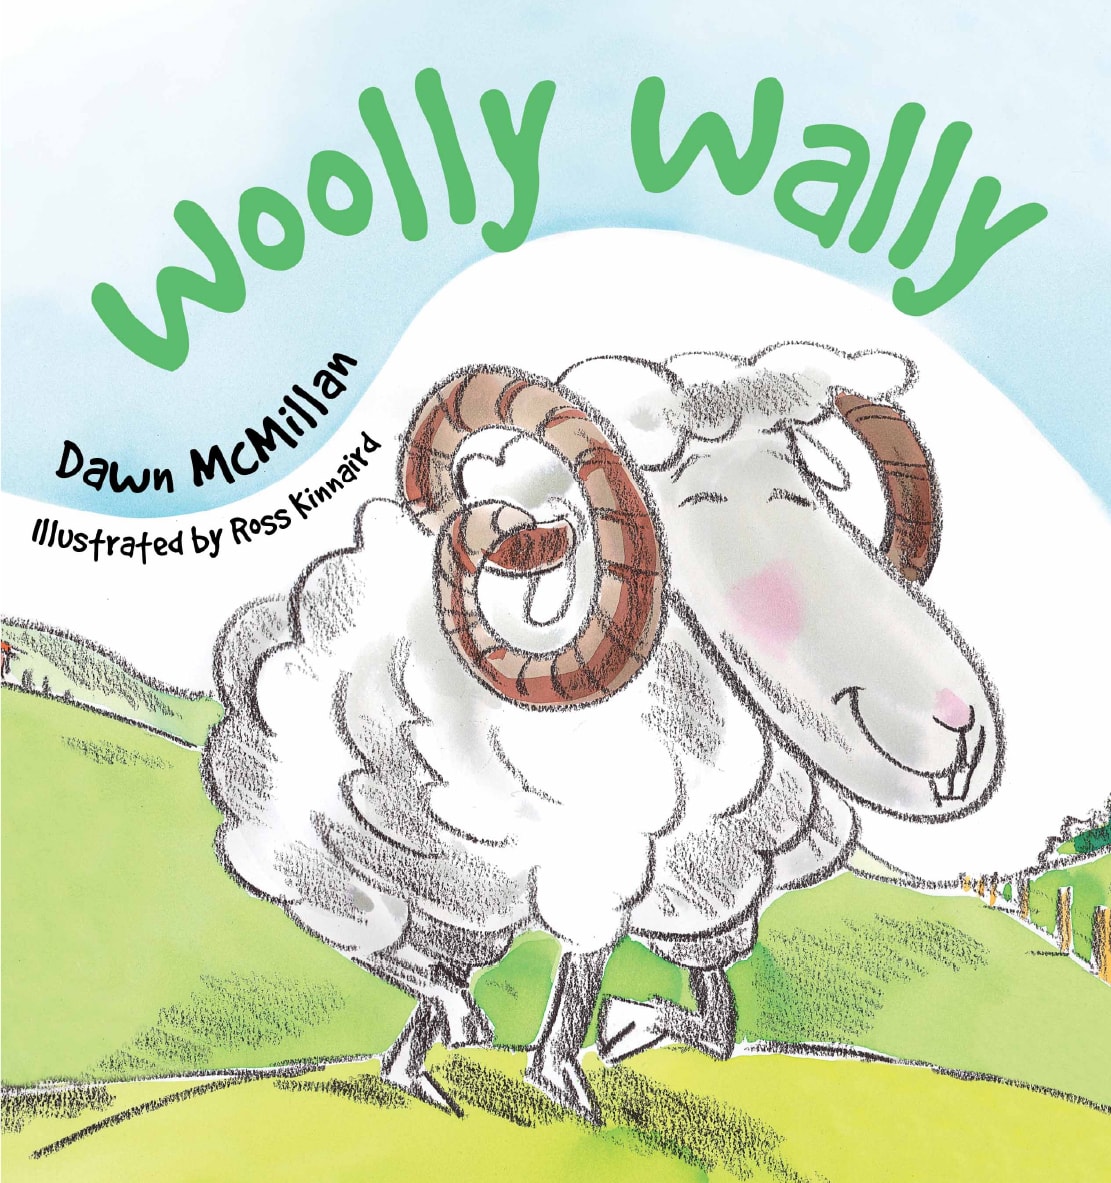 Woollywally Min